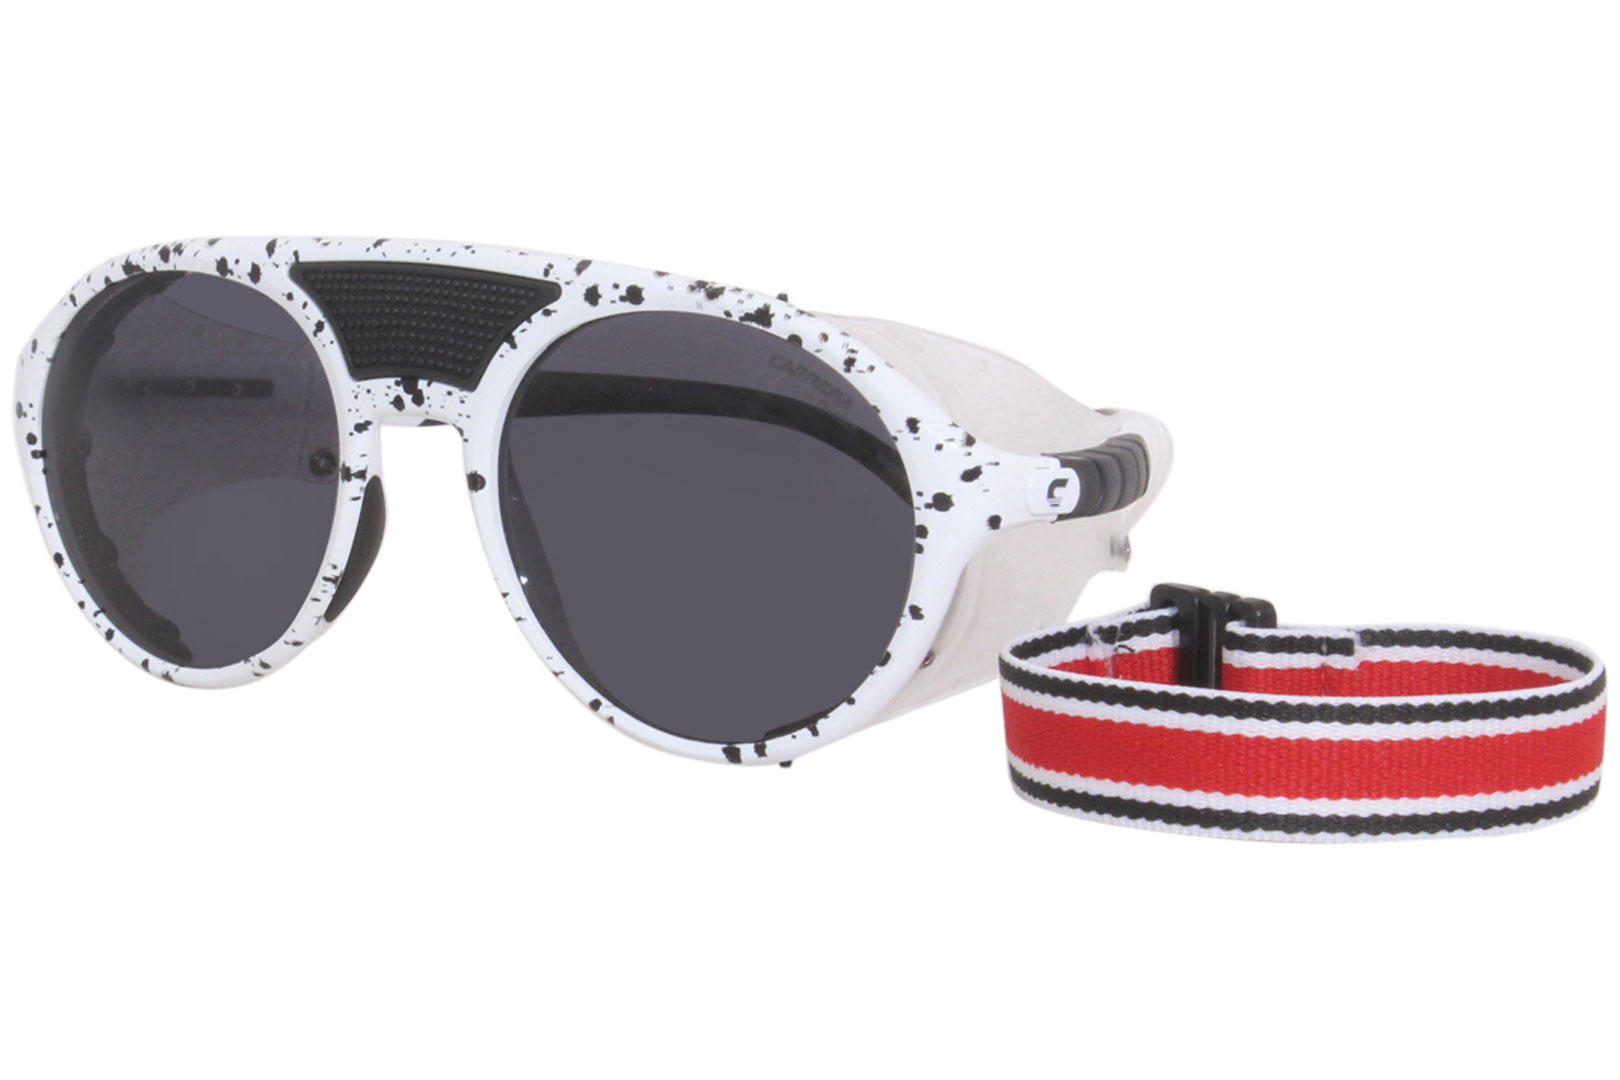 https://www.eyespecs.com/gallery-option/554277924/1/carrera-hyperfit-19-s-sunglasses-mens-wrap-around-white-black-grey-6yx-ir-1.jpg